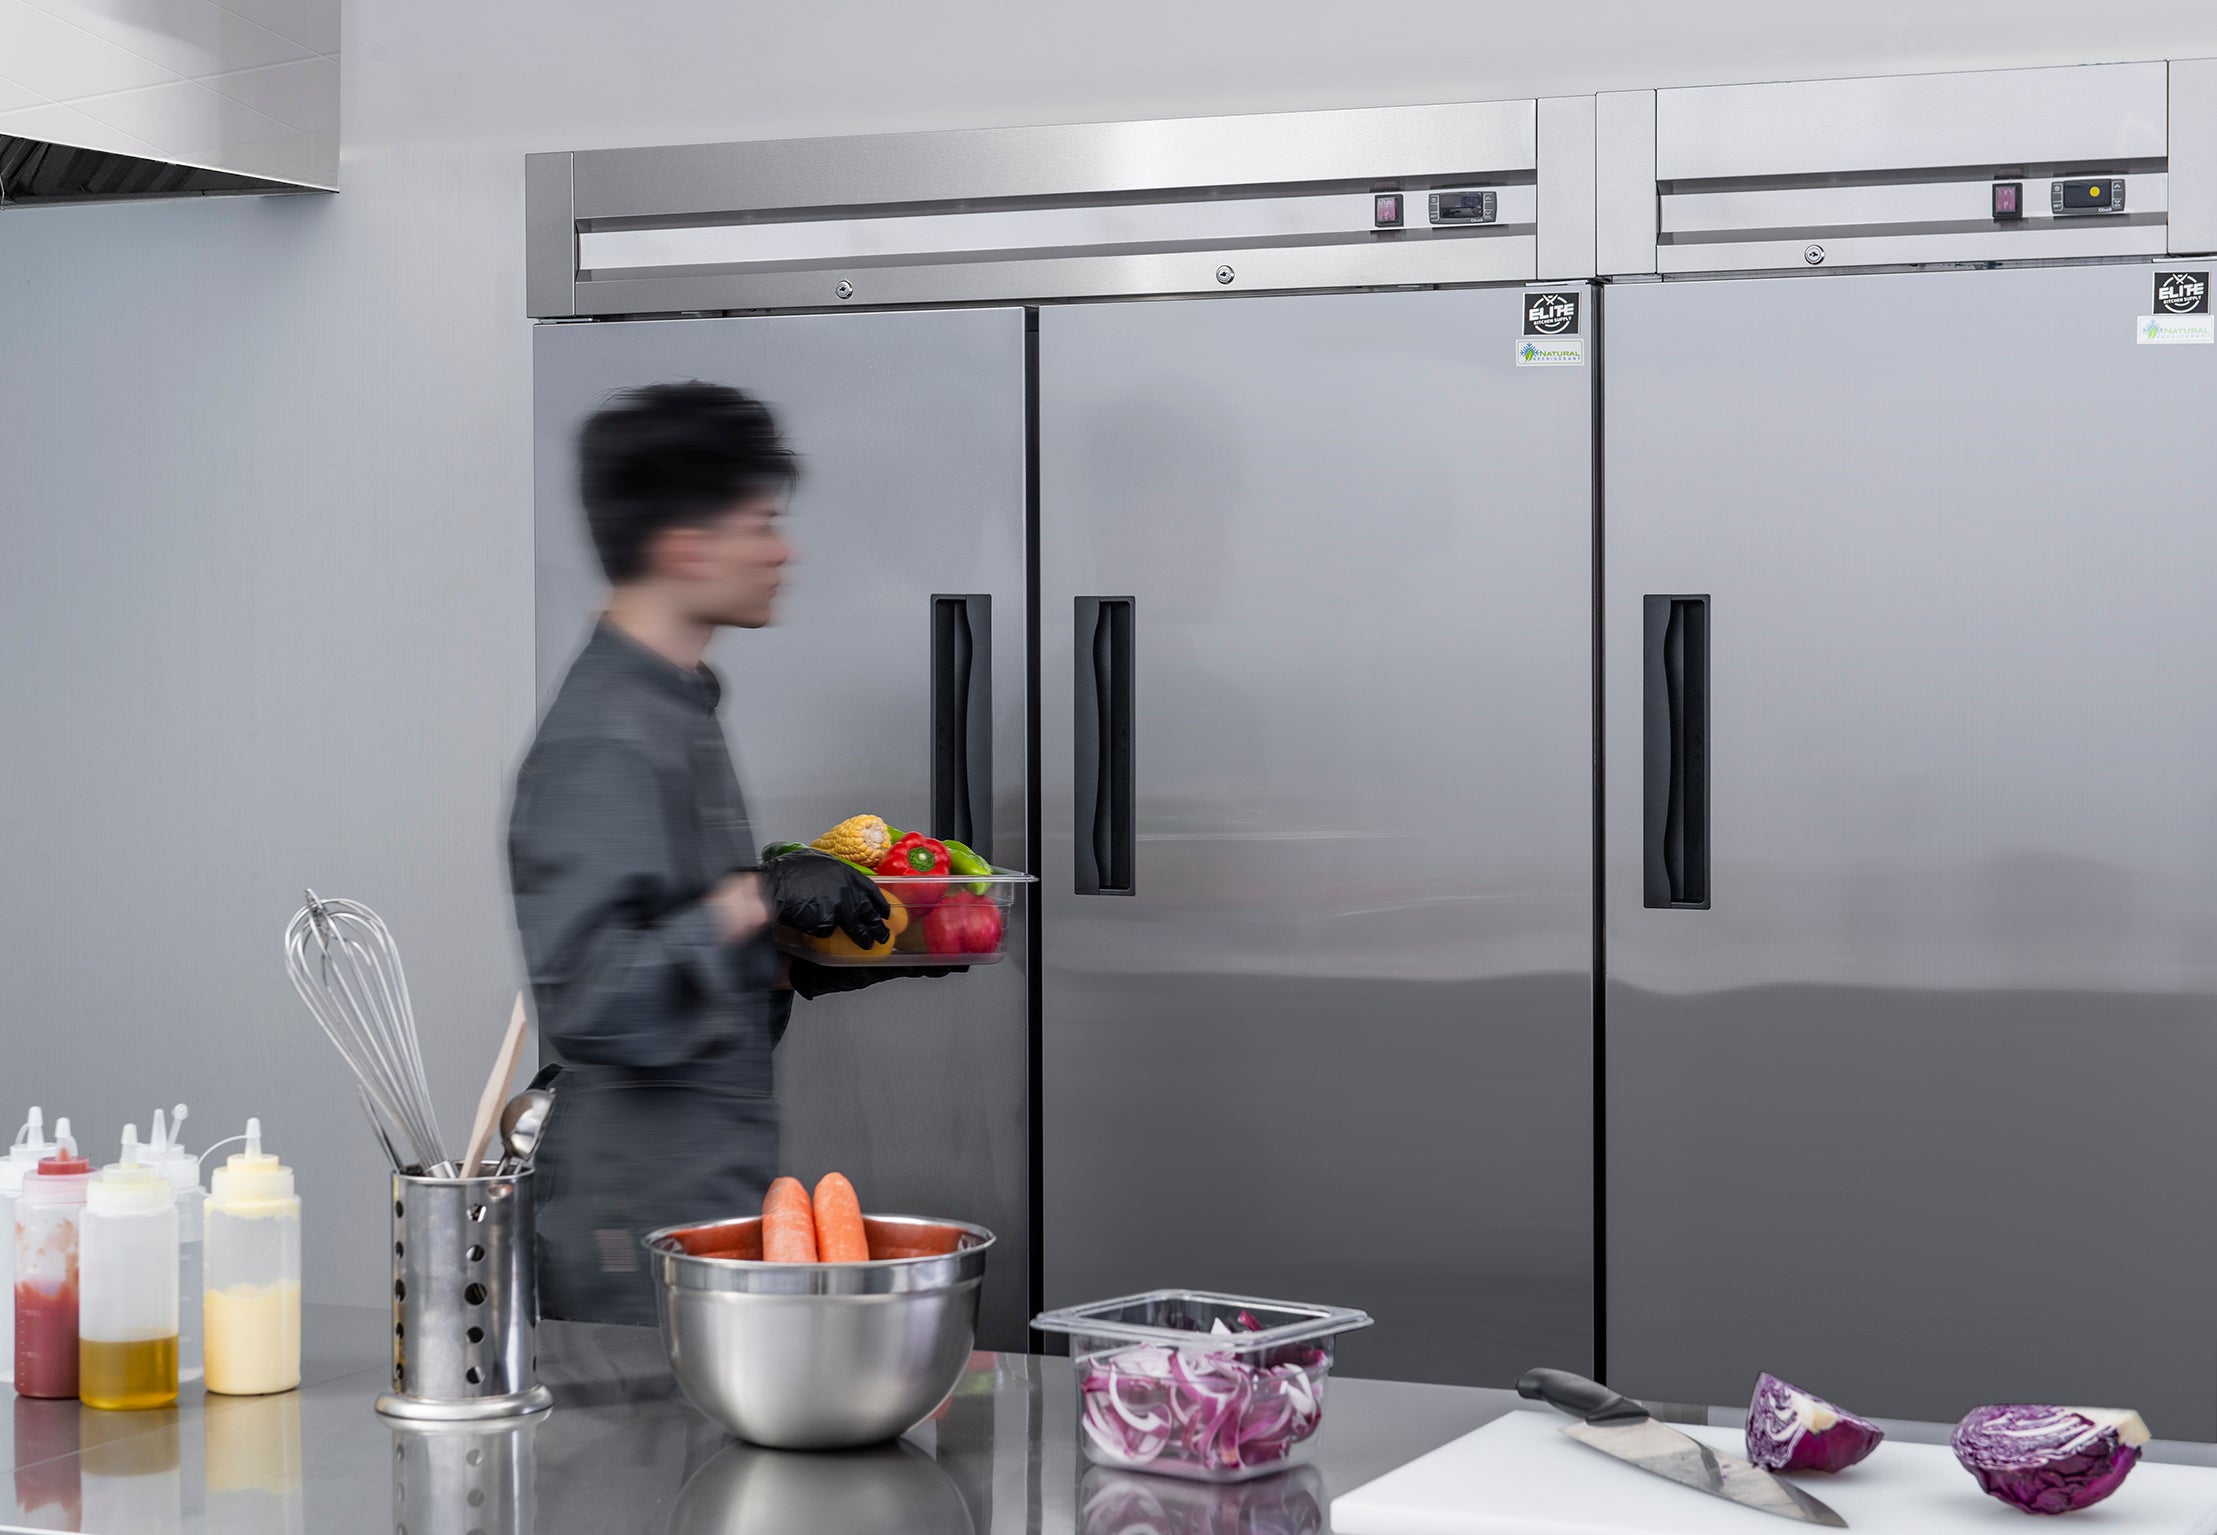 Elite Kitchen Supply 60 in. W 15.5 Cu. ft. 2-Door Commercial Upright Undercounter Freezer, Silver